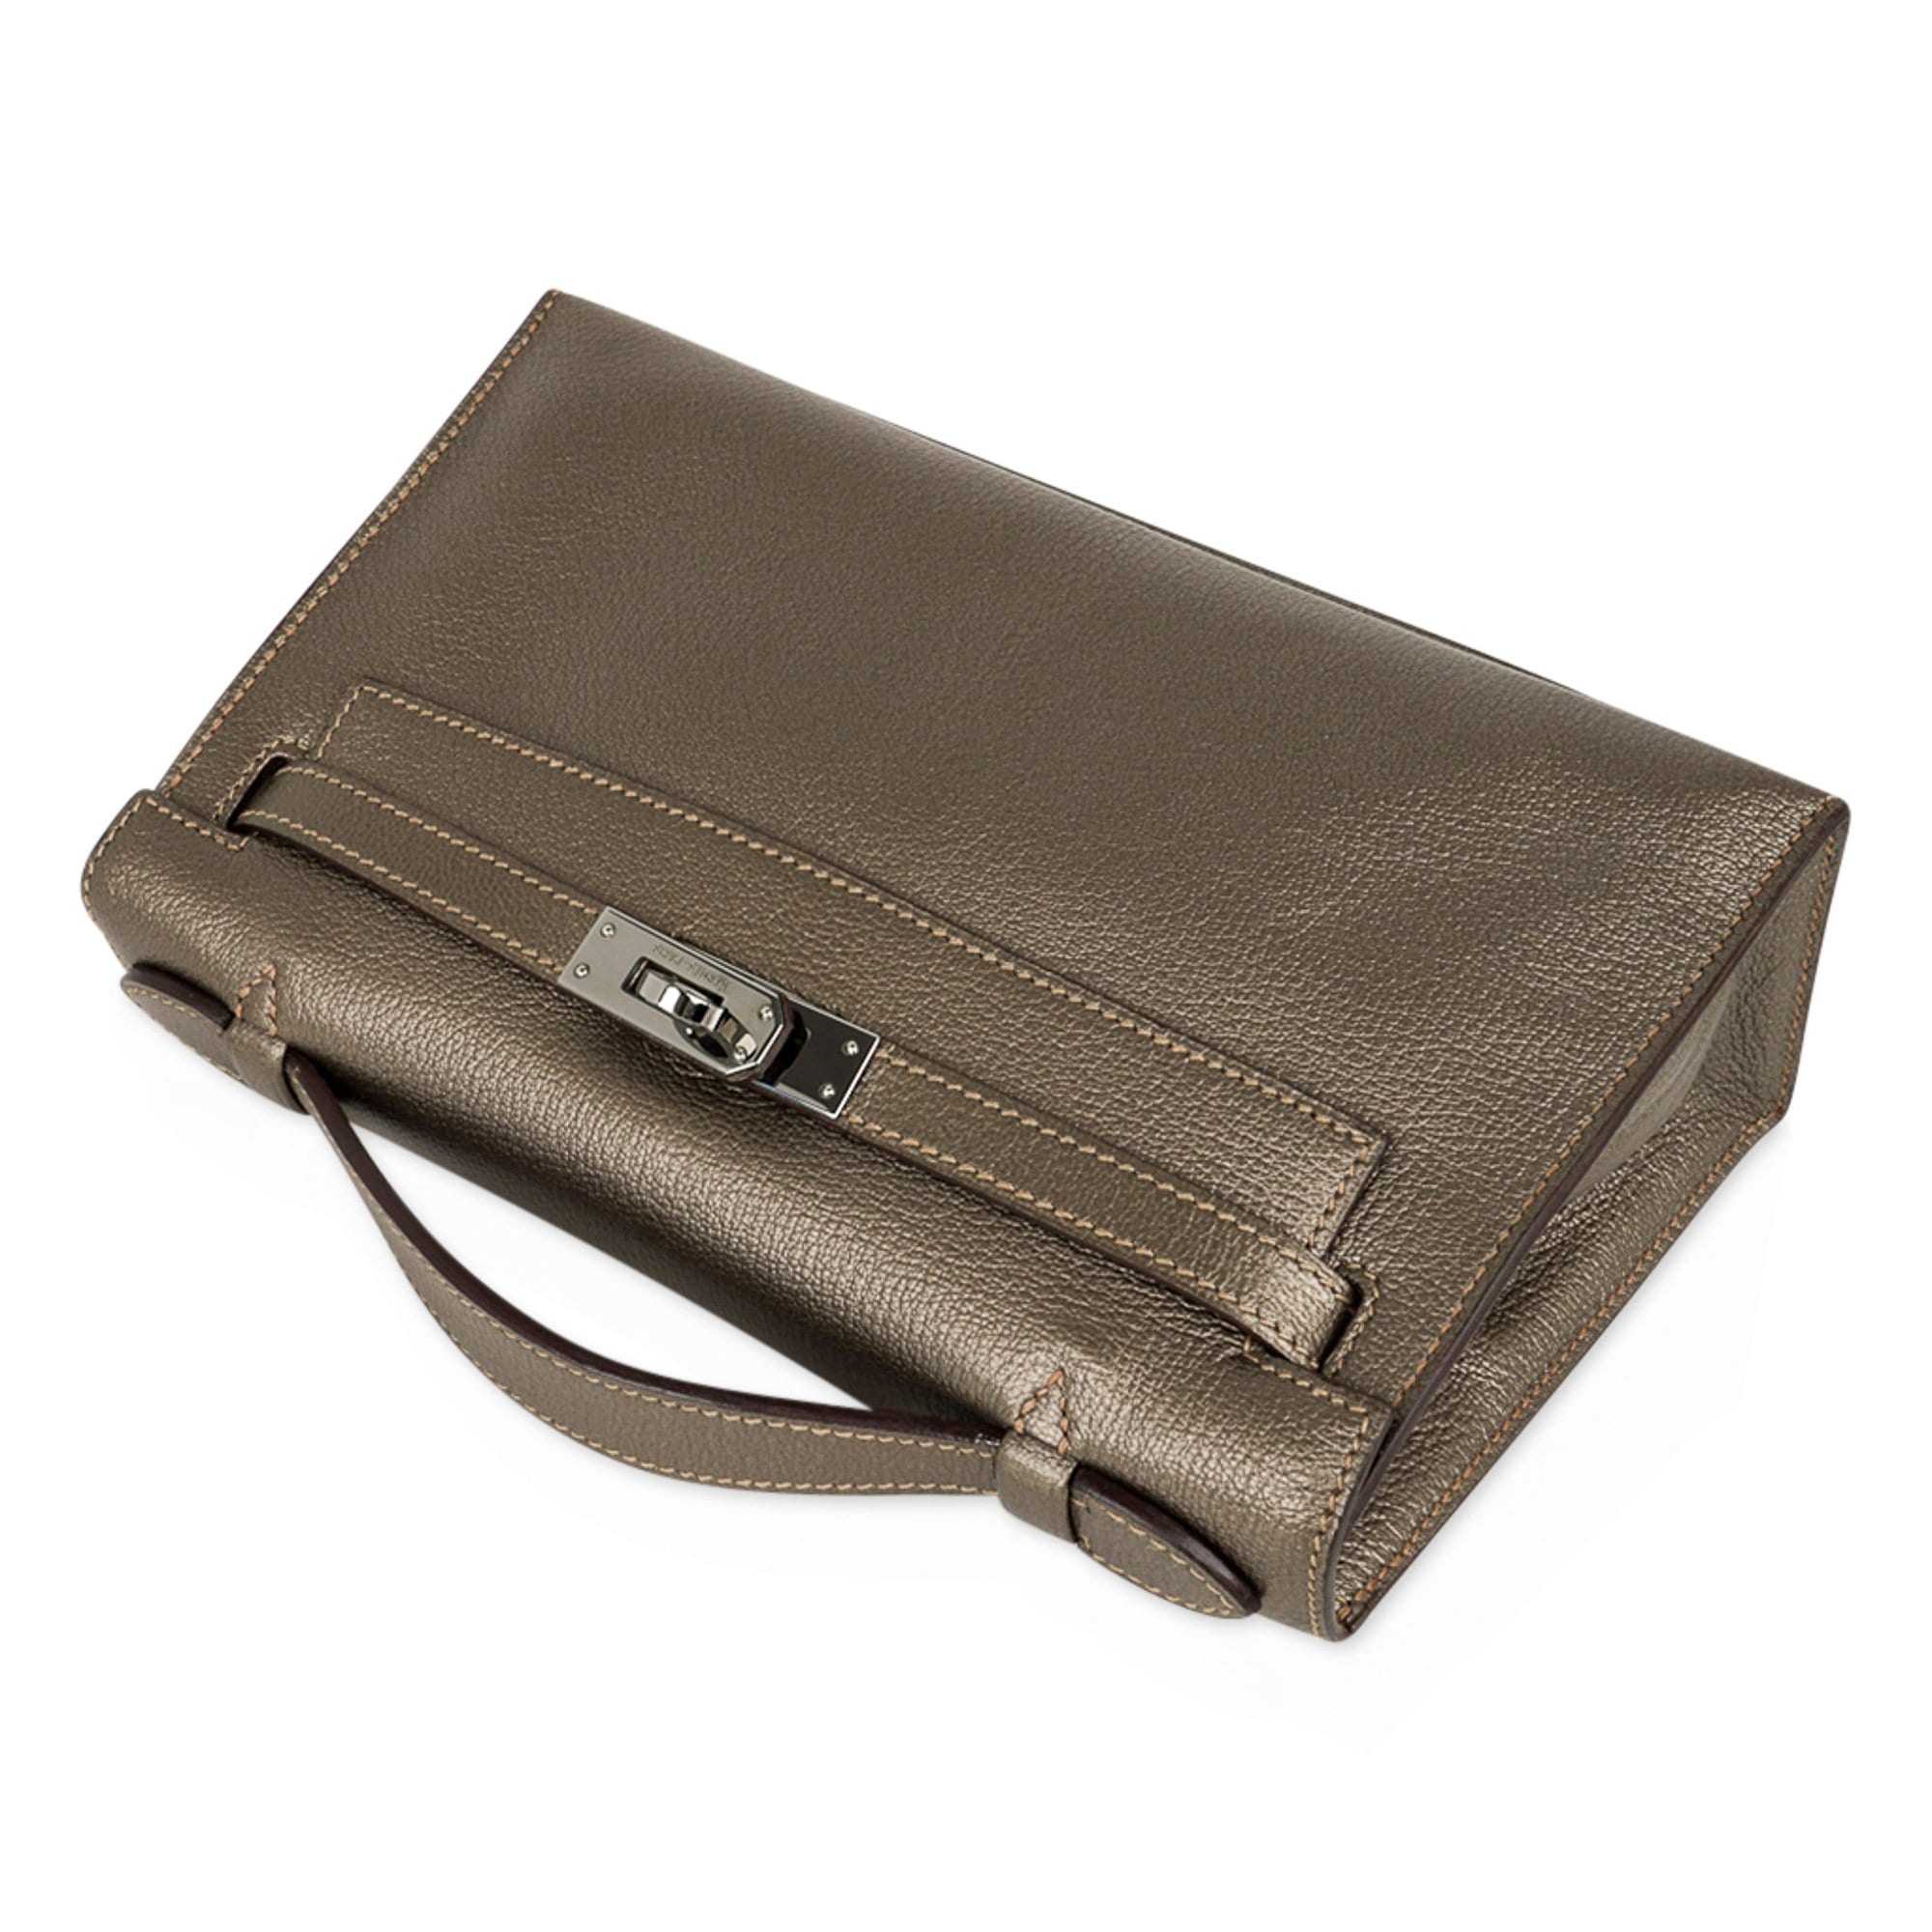 Hermès Anemone Swift Leather Kelly Pochette Bag with Gold Hardware., Lot  #58128